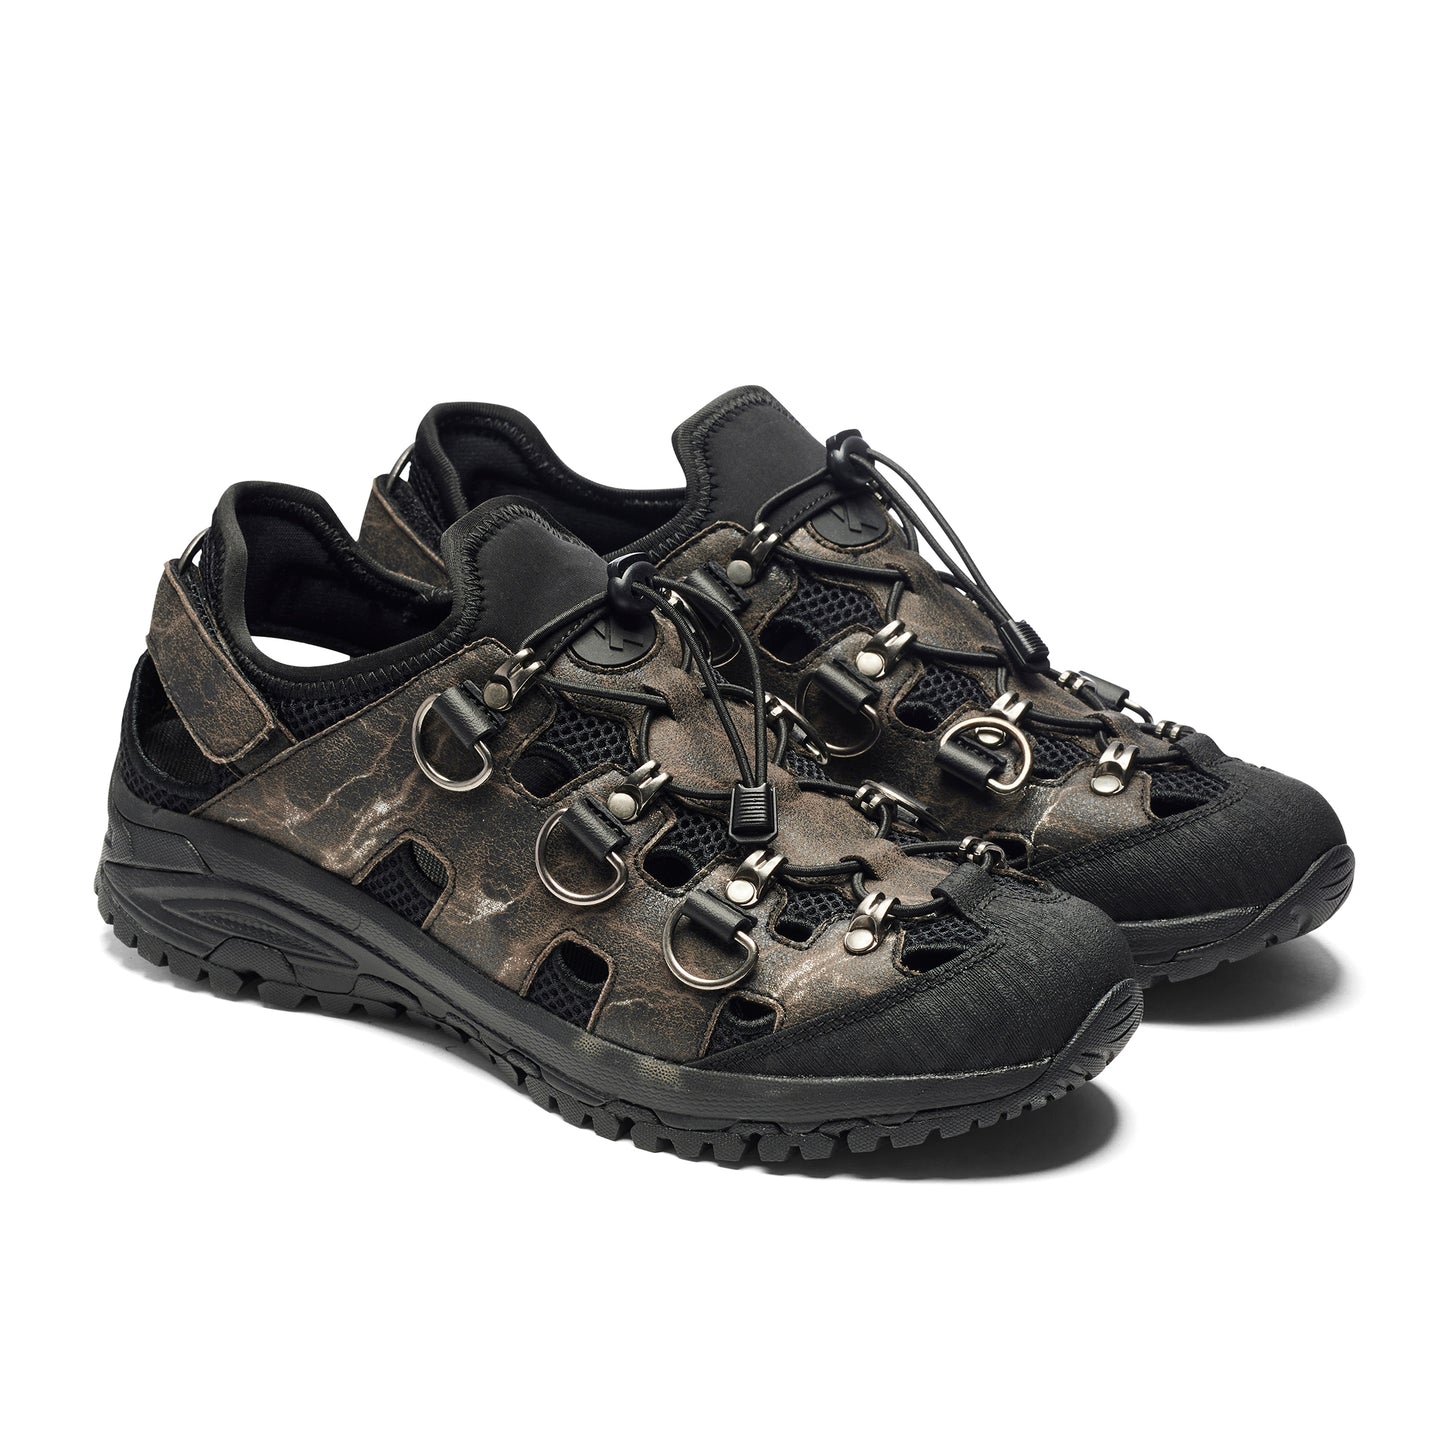 Apex Predator Men's Trail Hybrid Sandals - Grey - Koi Footwear - Three-Quarters View